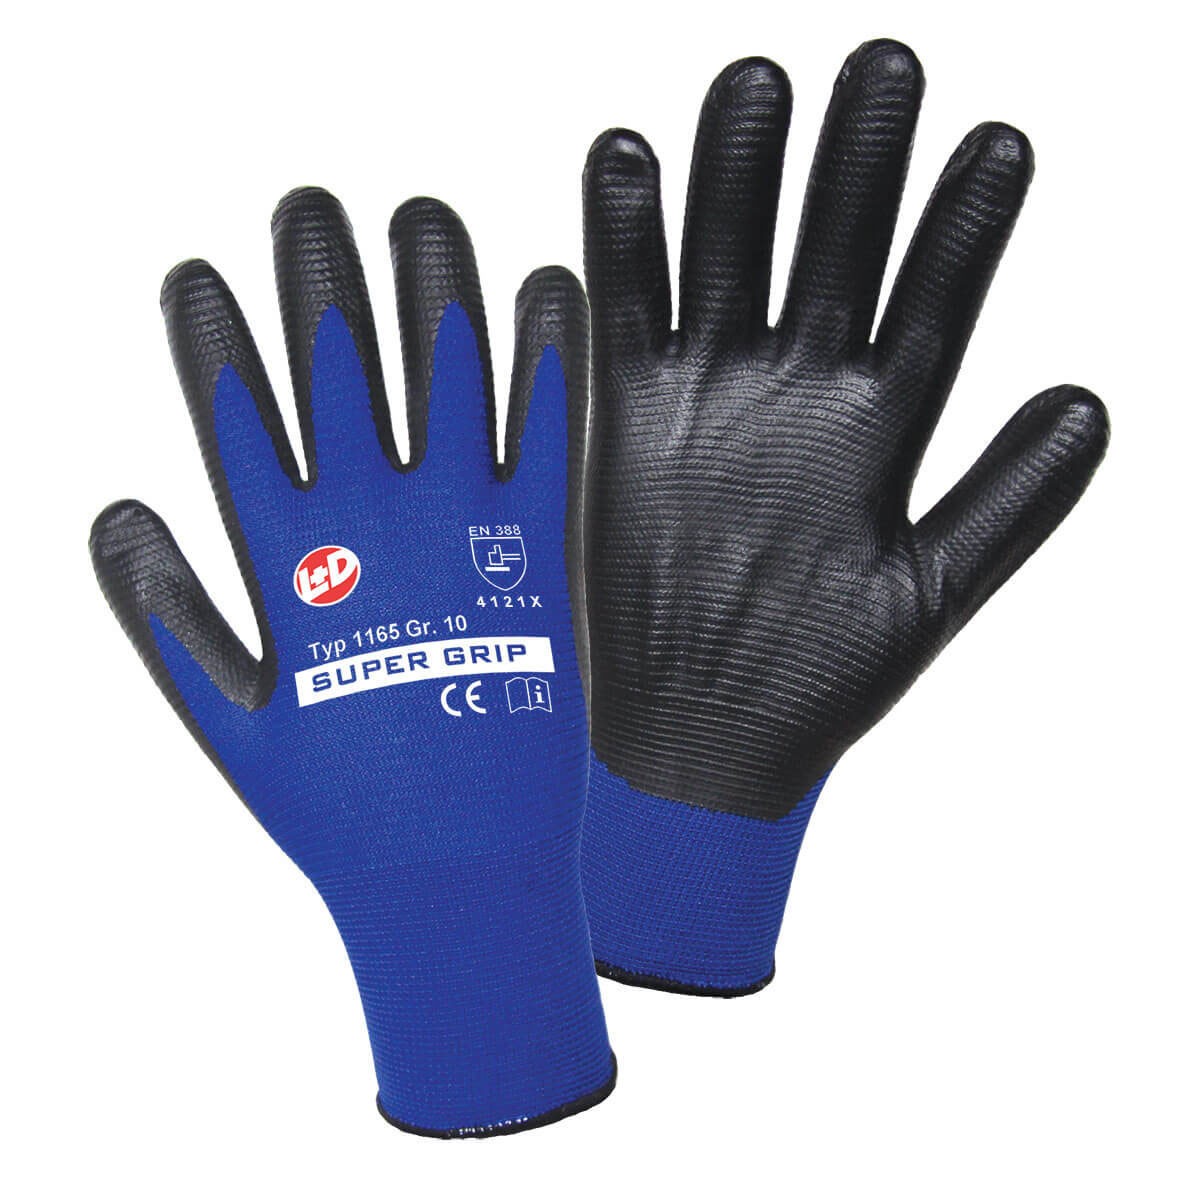 L+D SUPER GRIP blue, black, Nylon Protective gloves 1165-11 buy